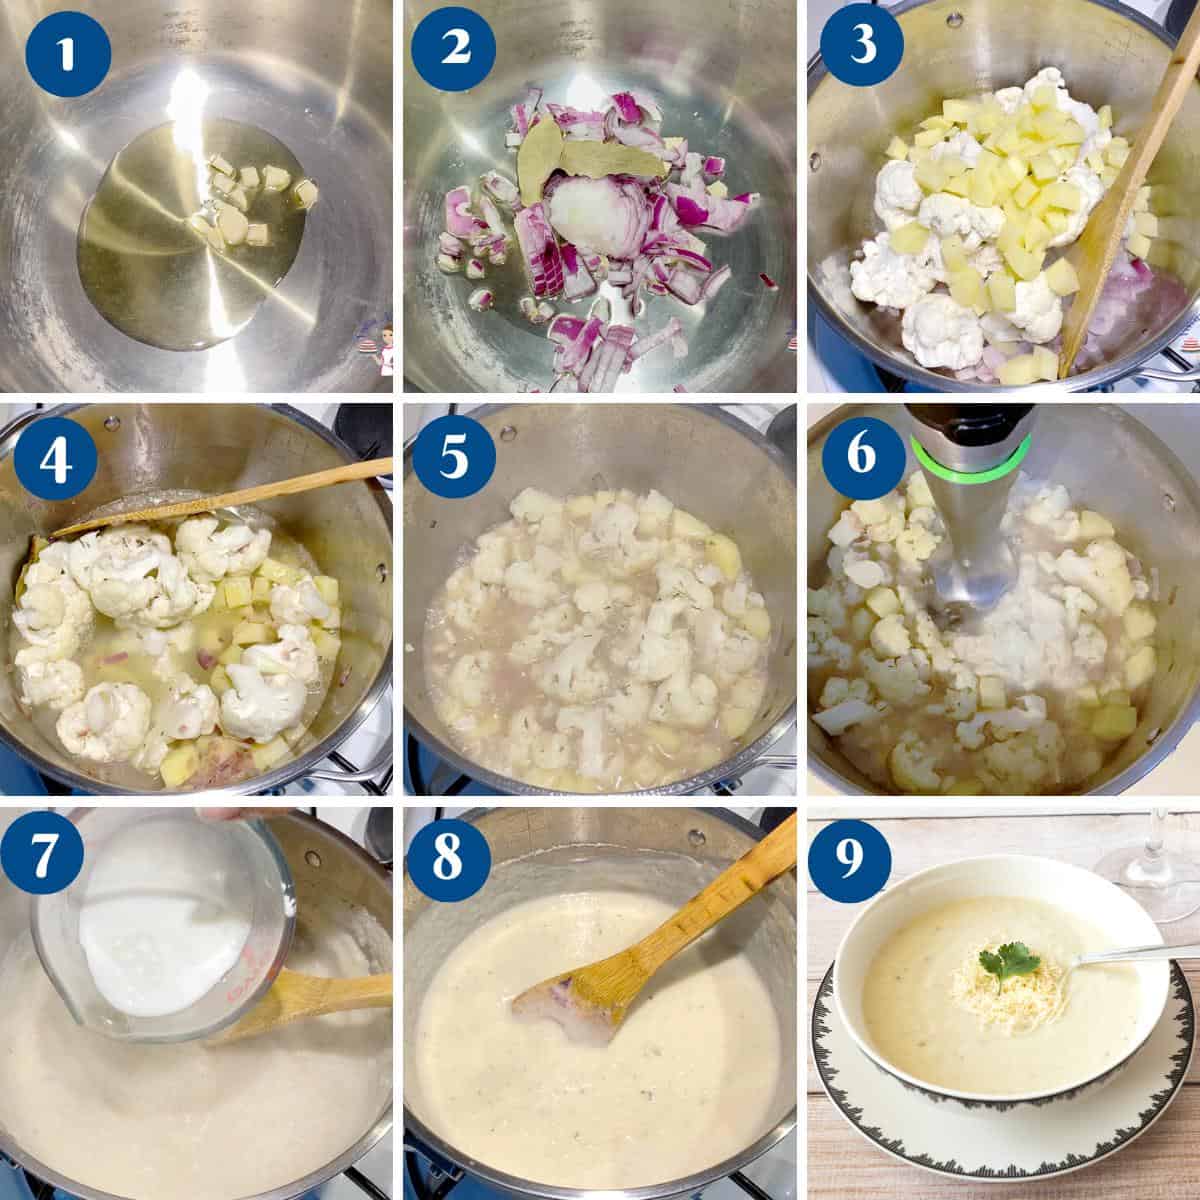 Progress pictures for cauliflower soup.